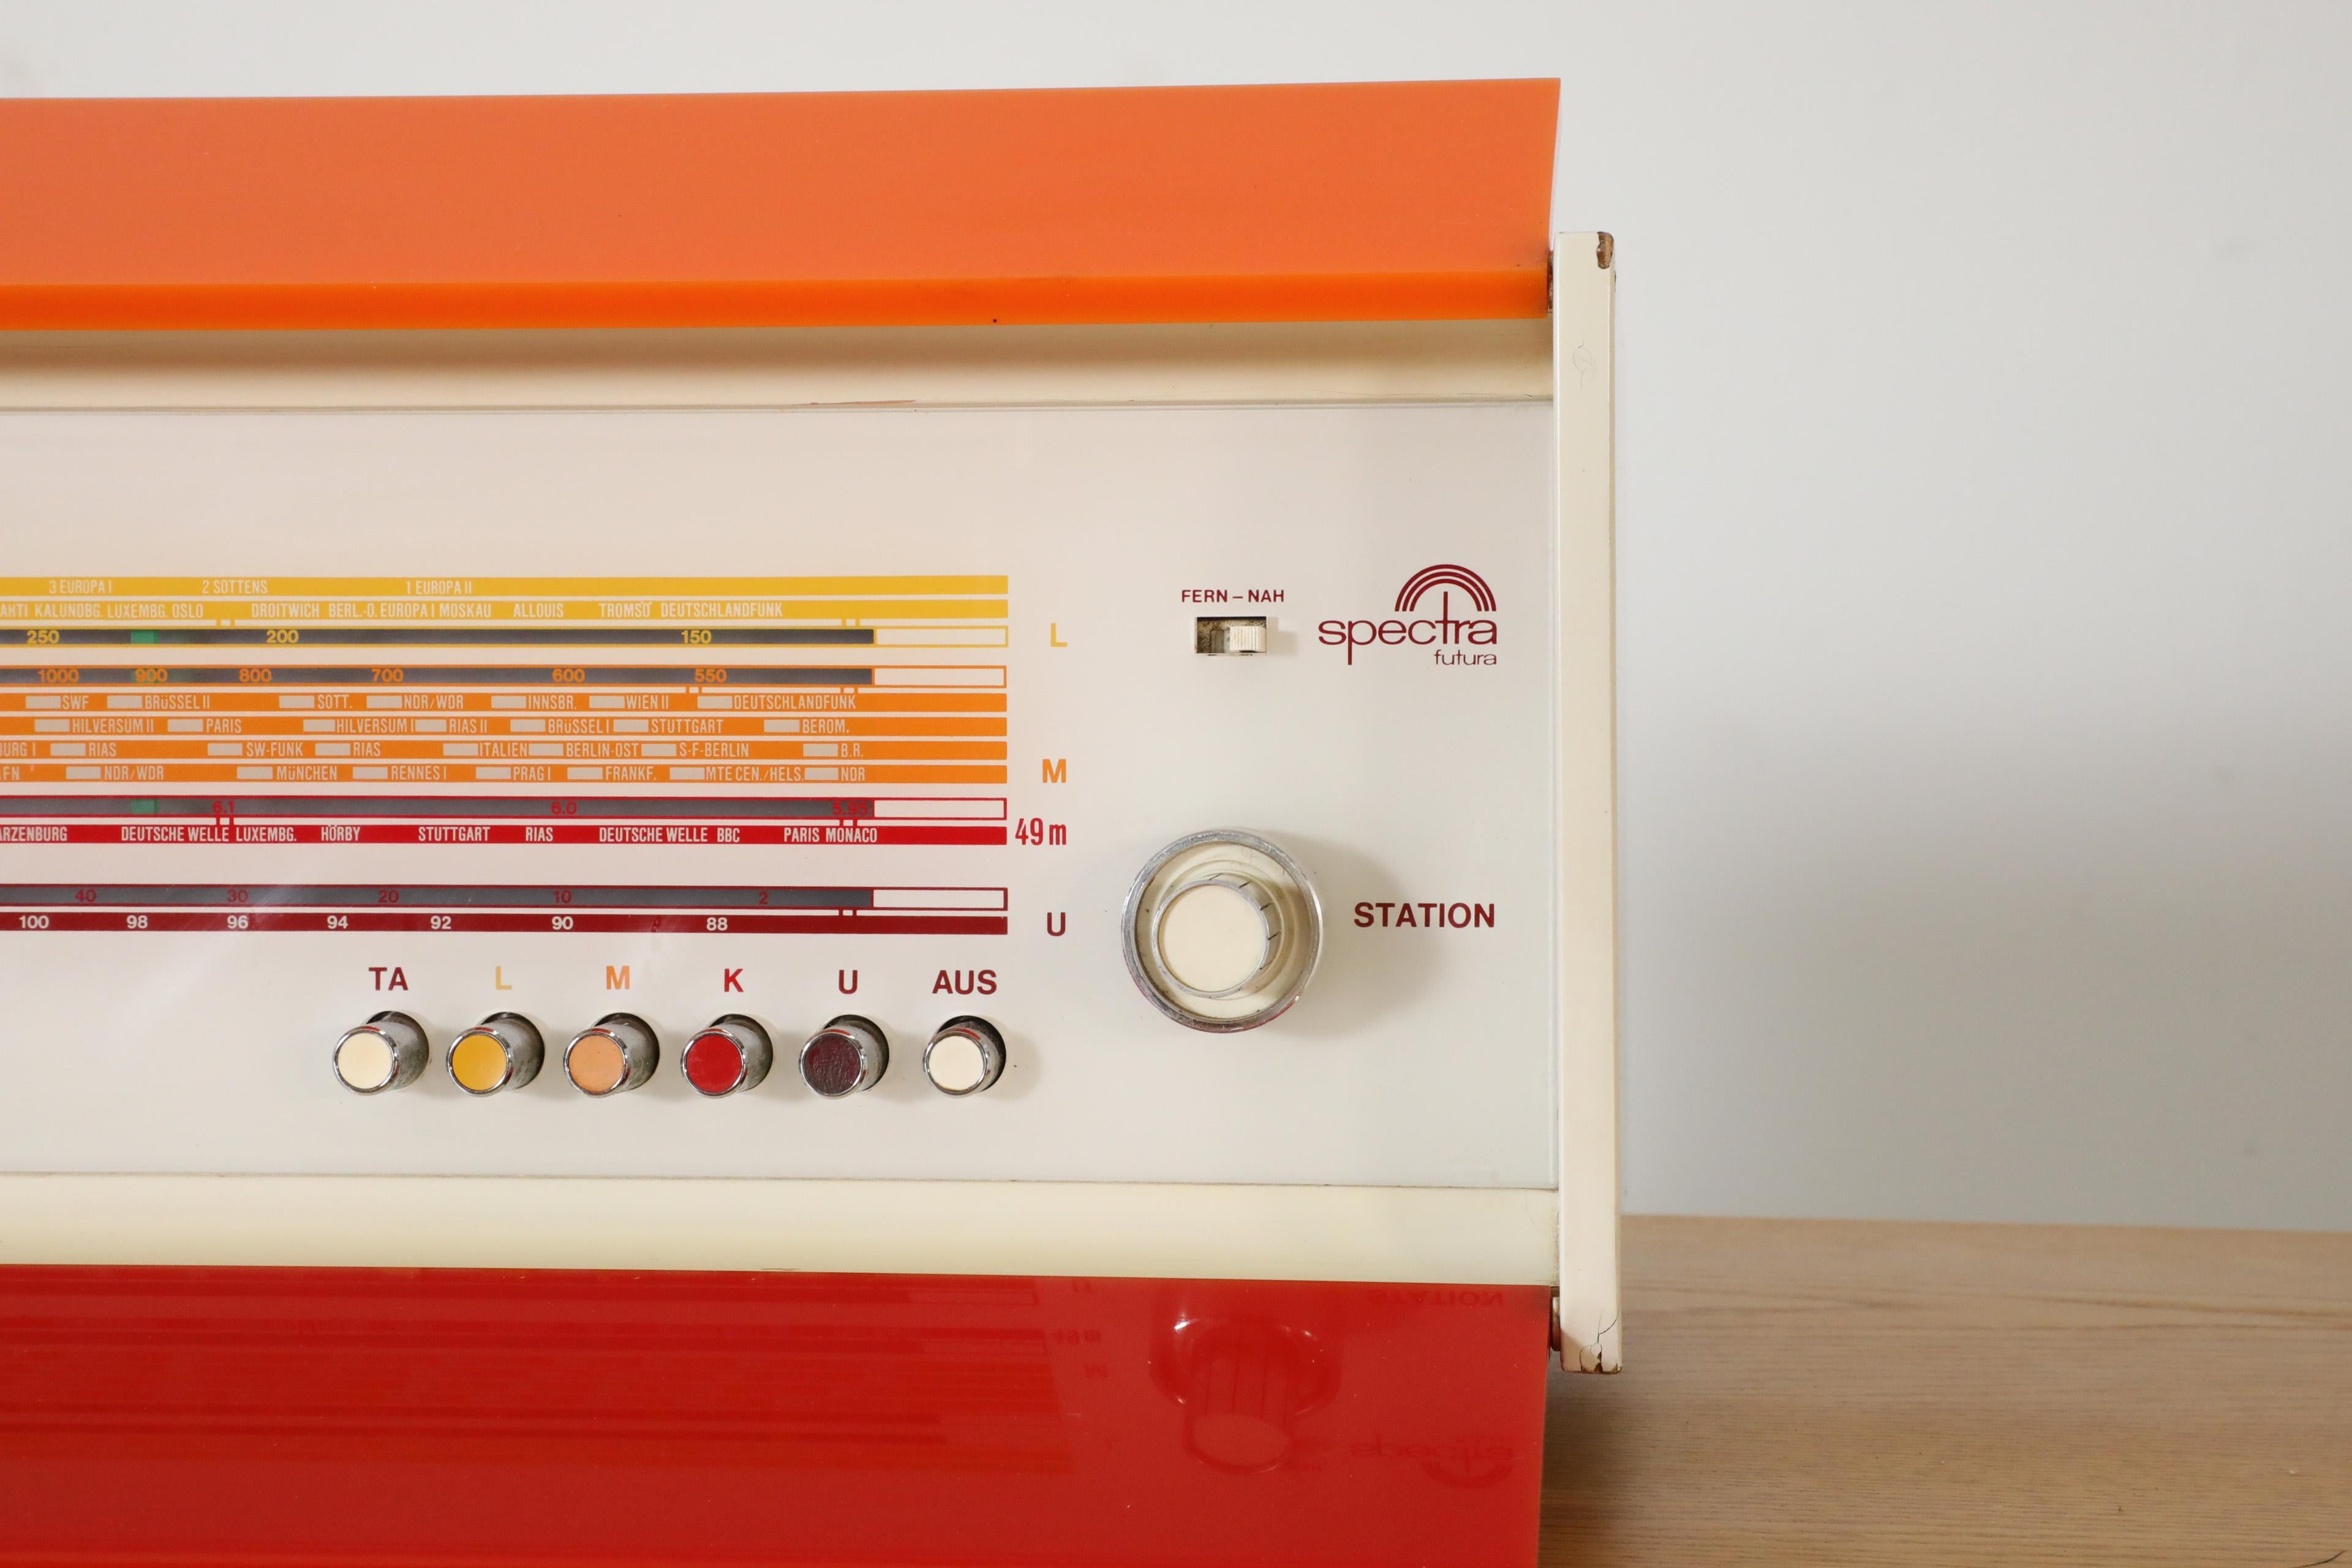 Raymond Loewy Designed Nordmende Spectra Futura Transistor Radio in Red & Orange For Sale 2